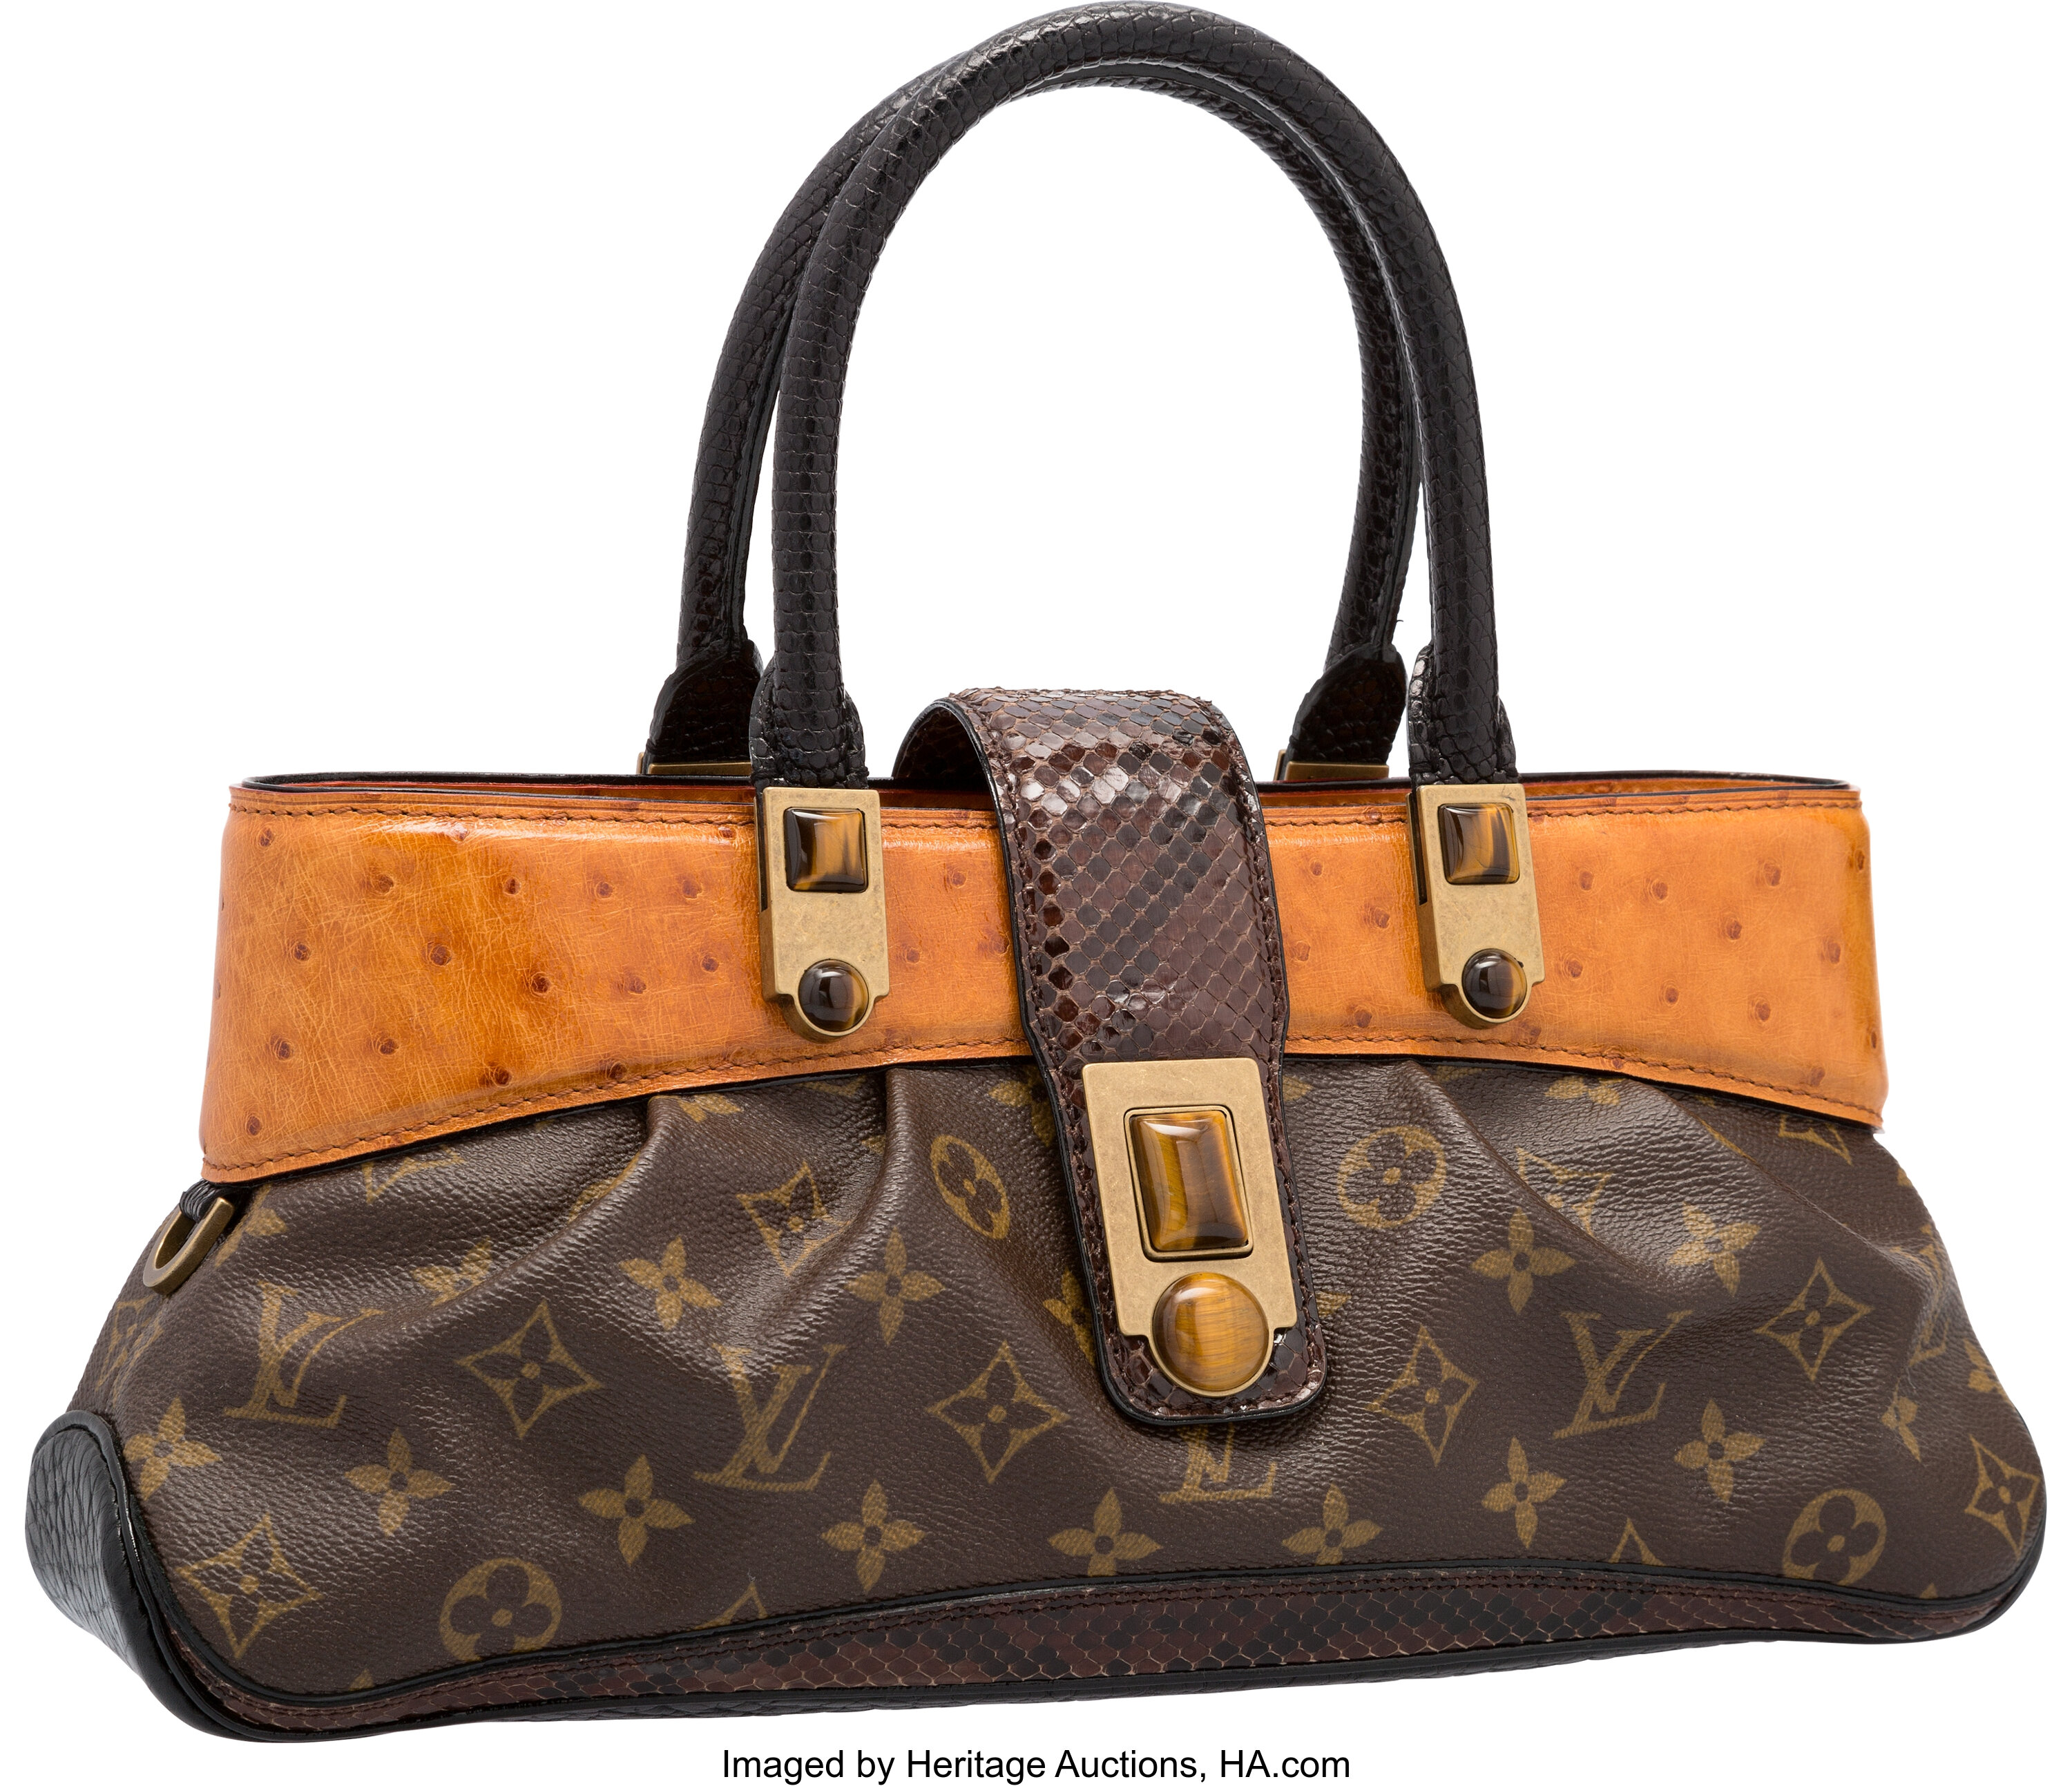 Louis Vuitton Handbags for sale in Wilton Center, New Hampshire